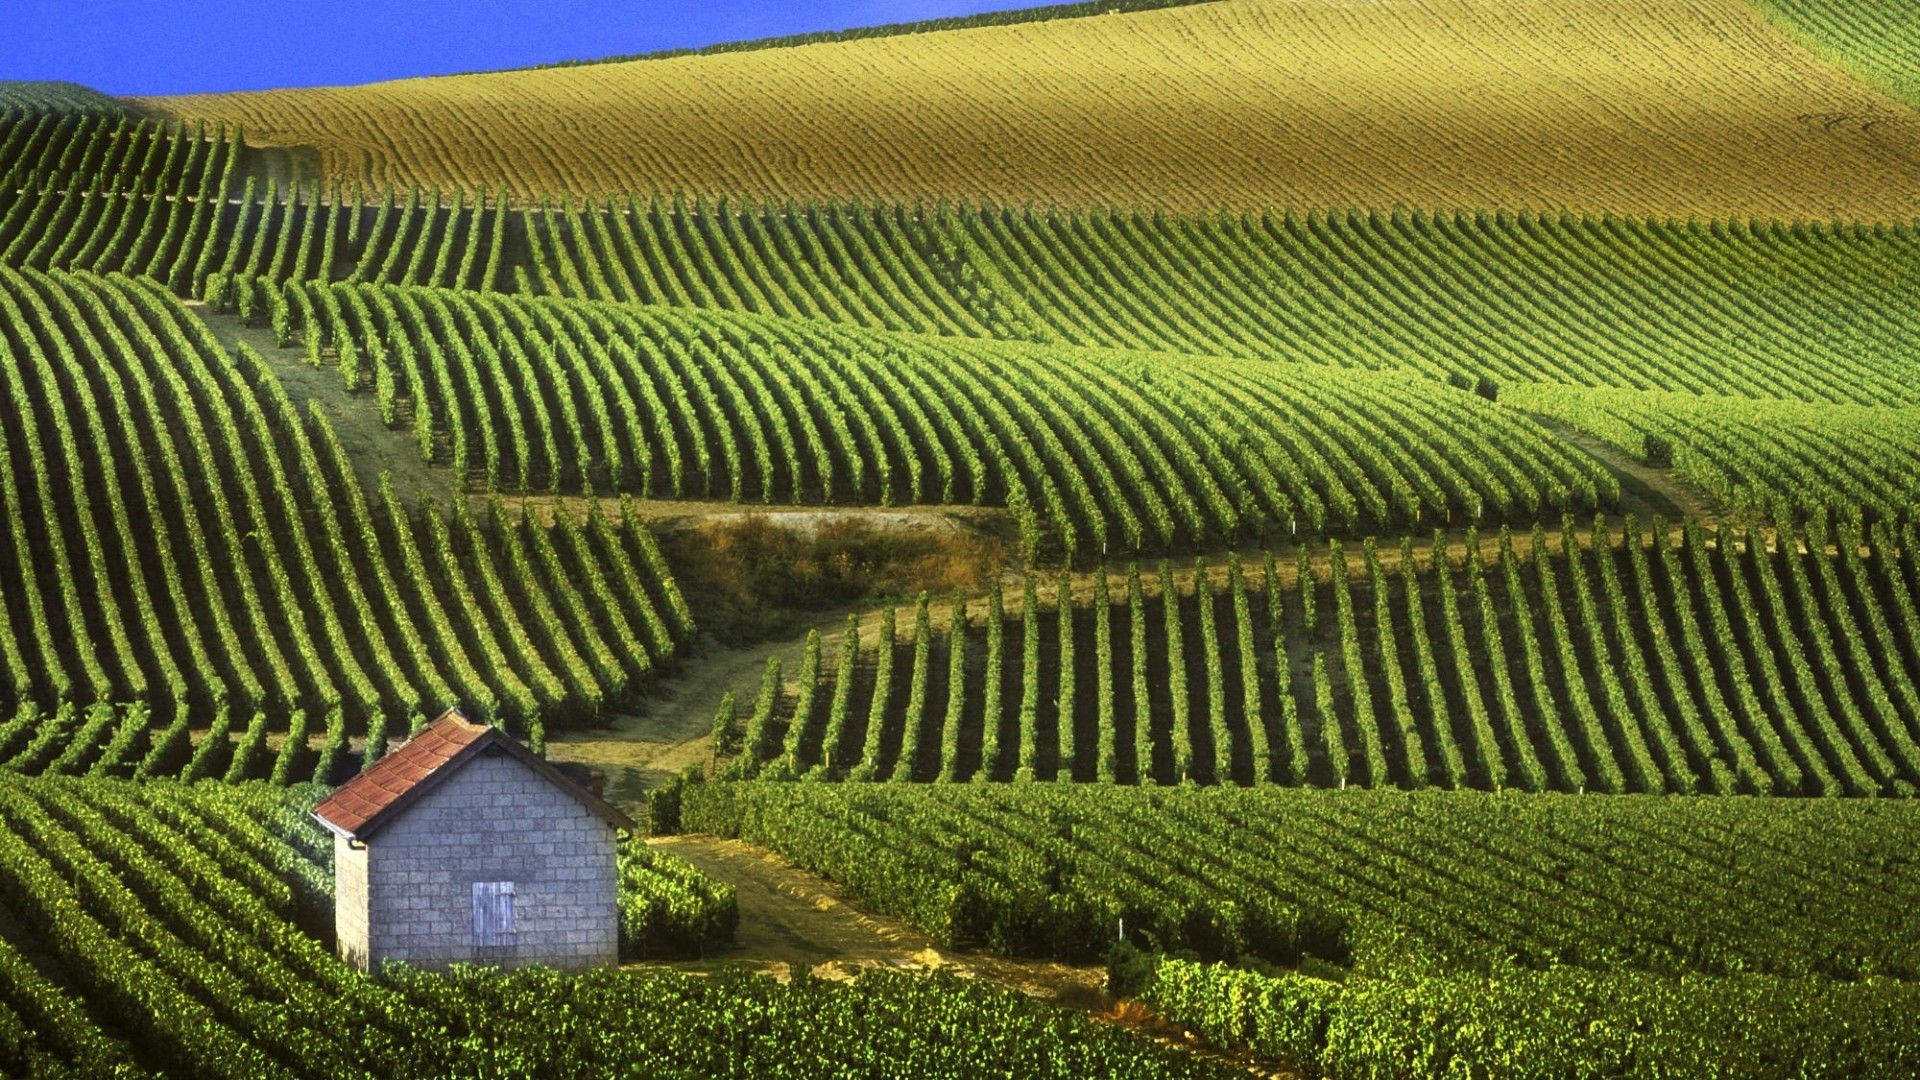 1920x1080 Vineyard. Vine Terraces | Cool places to visit, Champagne france, Champagne regi